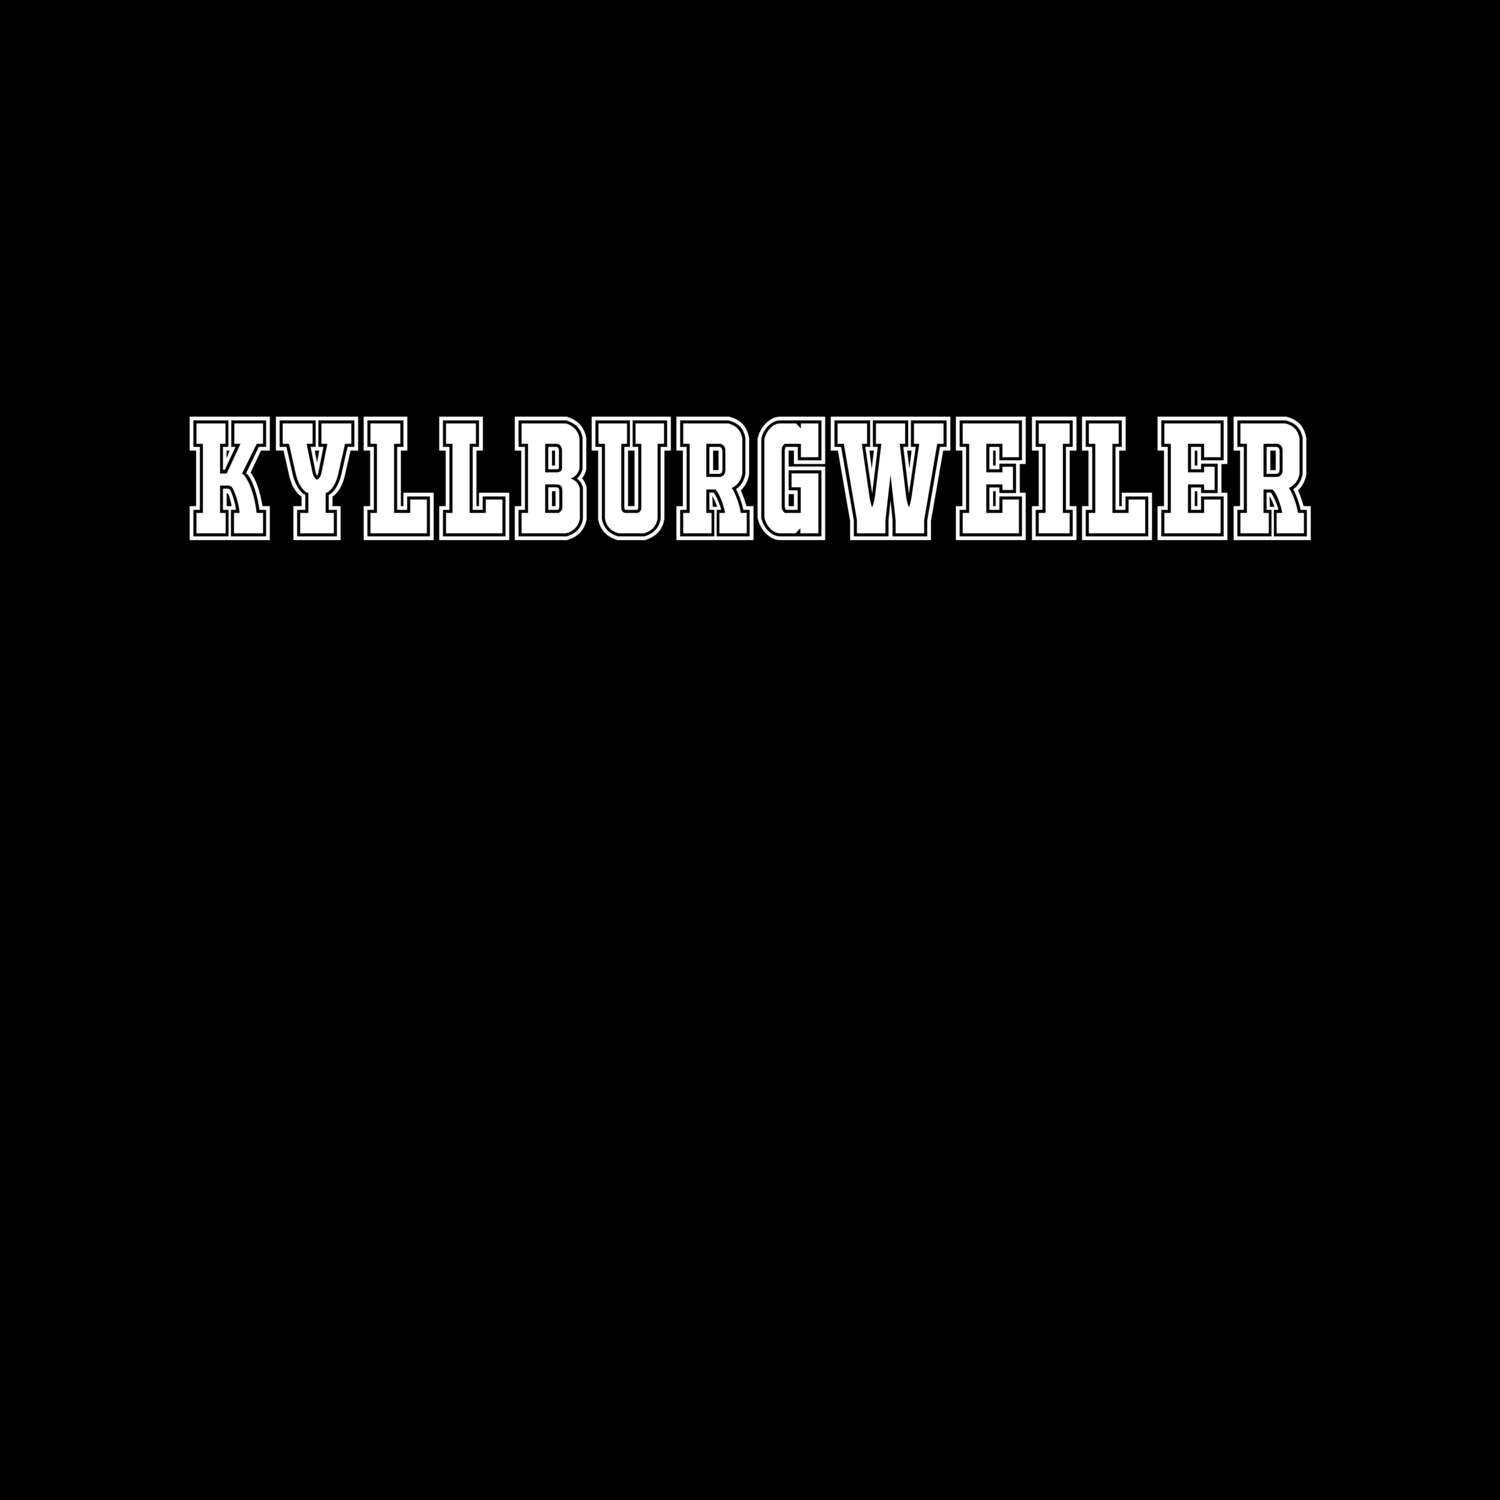 Kyllburgweiler T-Shirt »Classic«